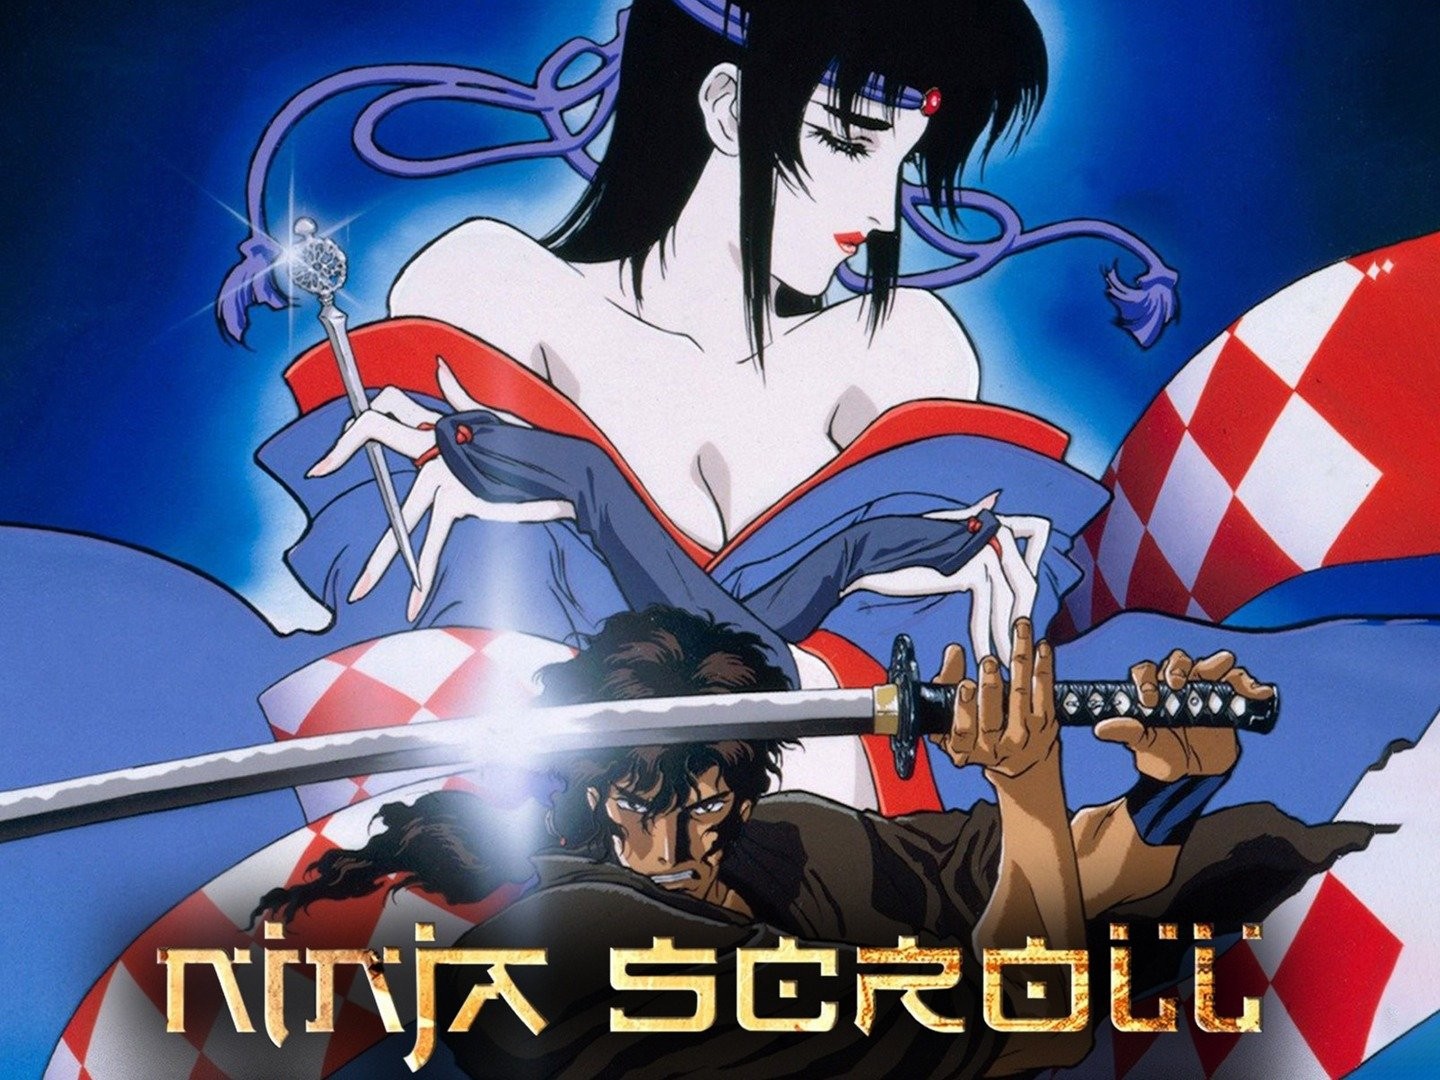 ninja-scroll